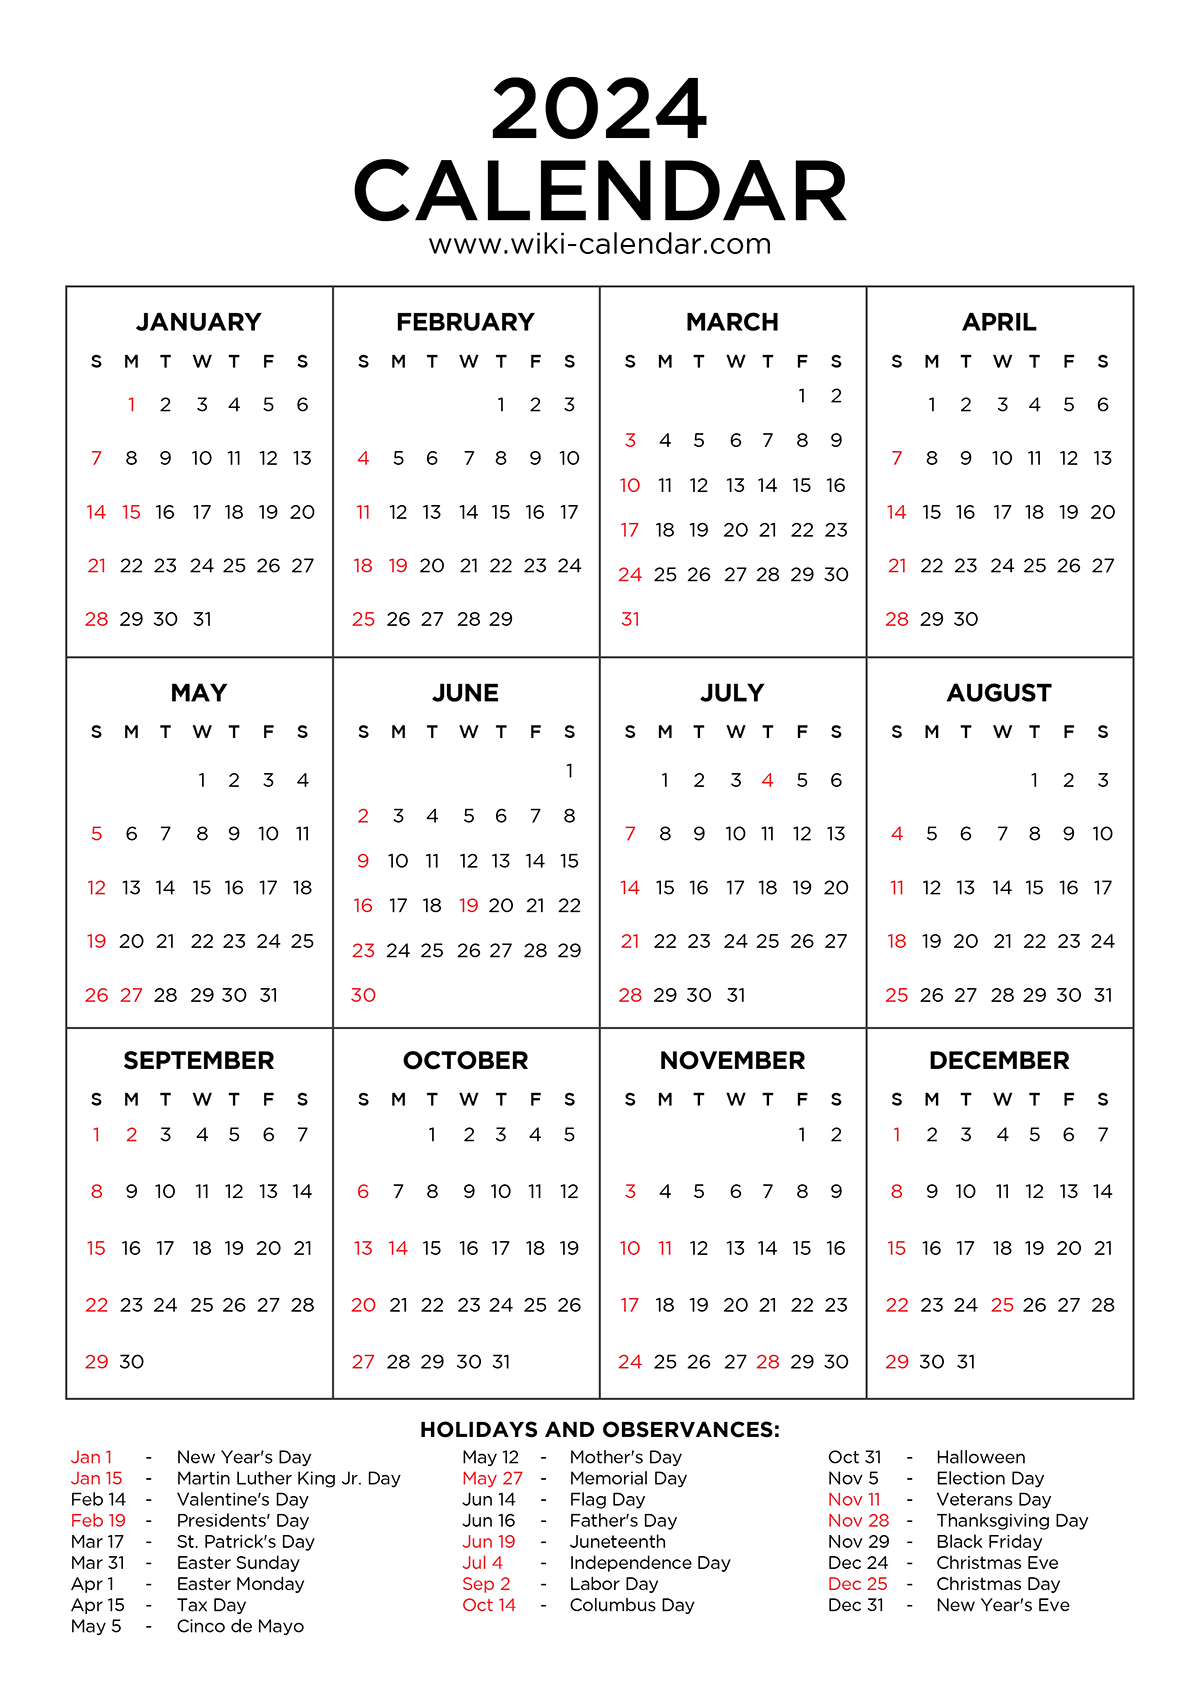 Year 2024 Calendar Printable With Holidays - Wiki Calendar with Free Printable Calendar 2024 By Month With Us Holidays